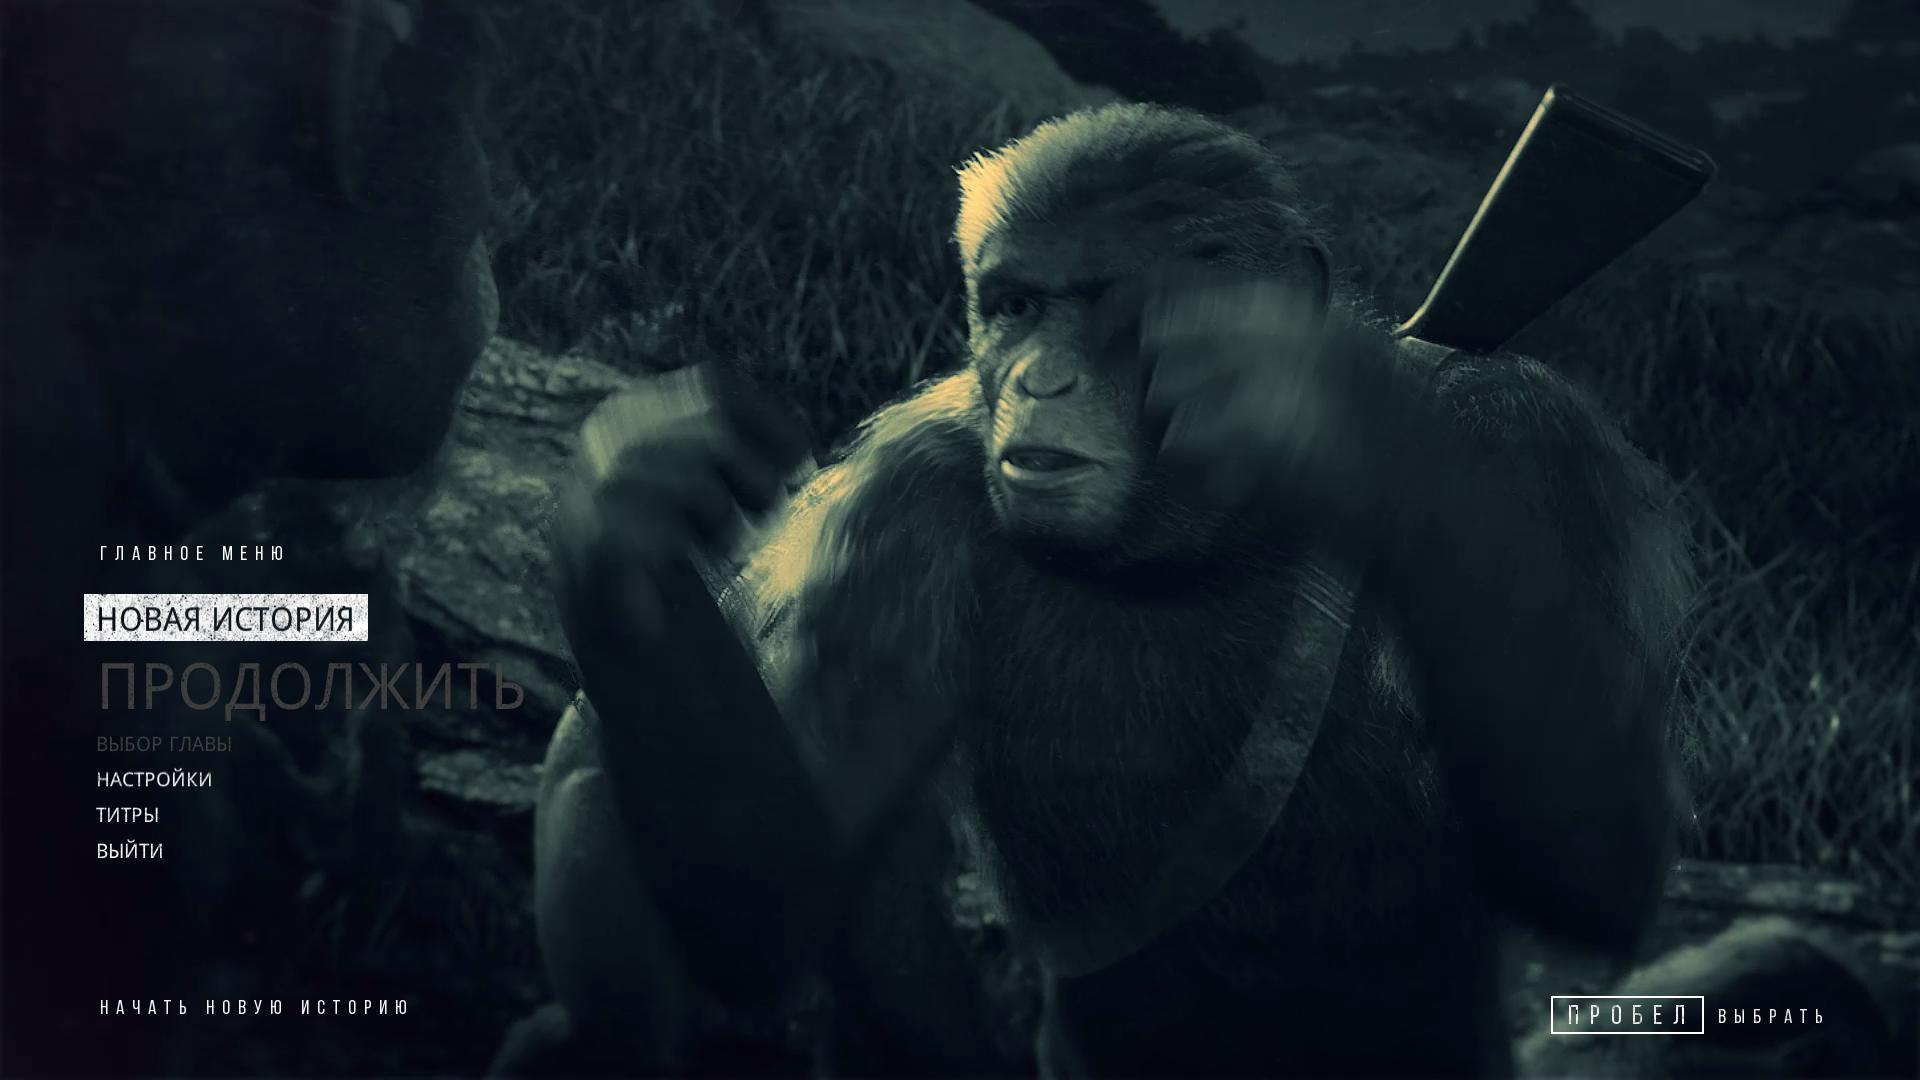 Игра планета обезьян. Planet of the Apes игра. Planet of the Apes: last Frontier игра. Планета обезьян игра 2001. Планета обезьян последний рубеж игра.